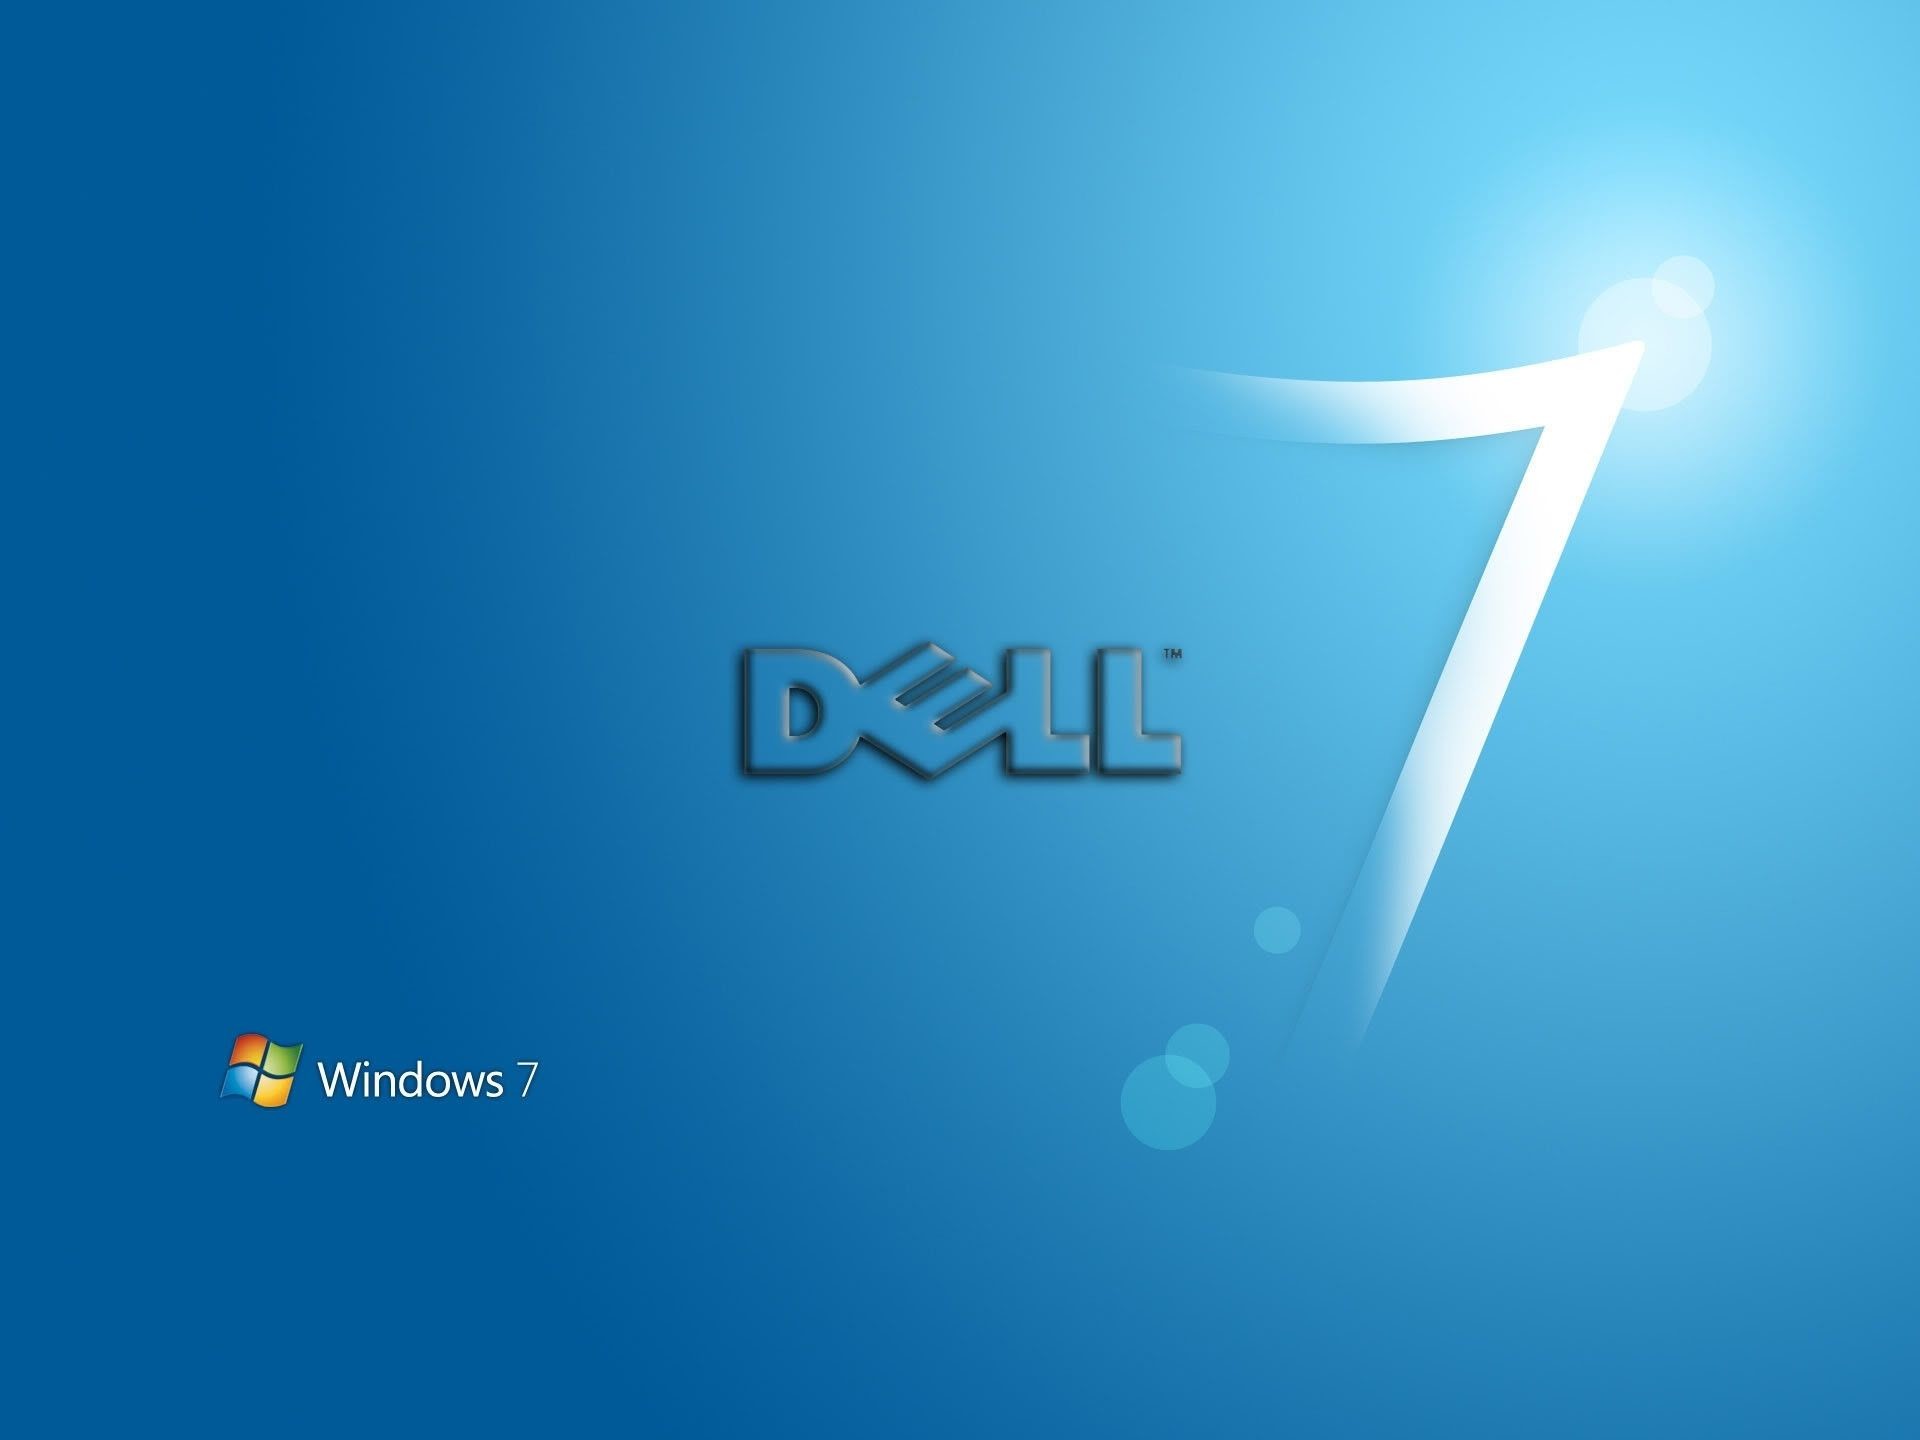 10 Best Dell Windows 7 Wallpaper Full Hd 1080p For Windows 7 Dell Background 1920x1440 Wallpaper Teahub Io